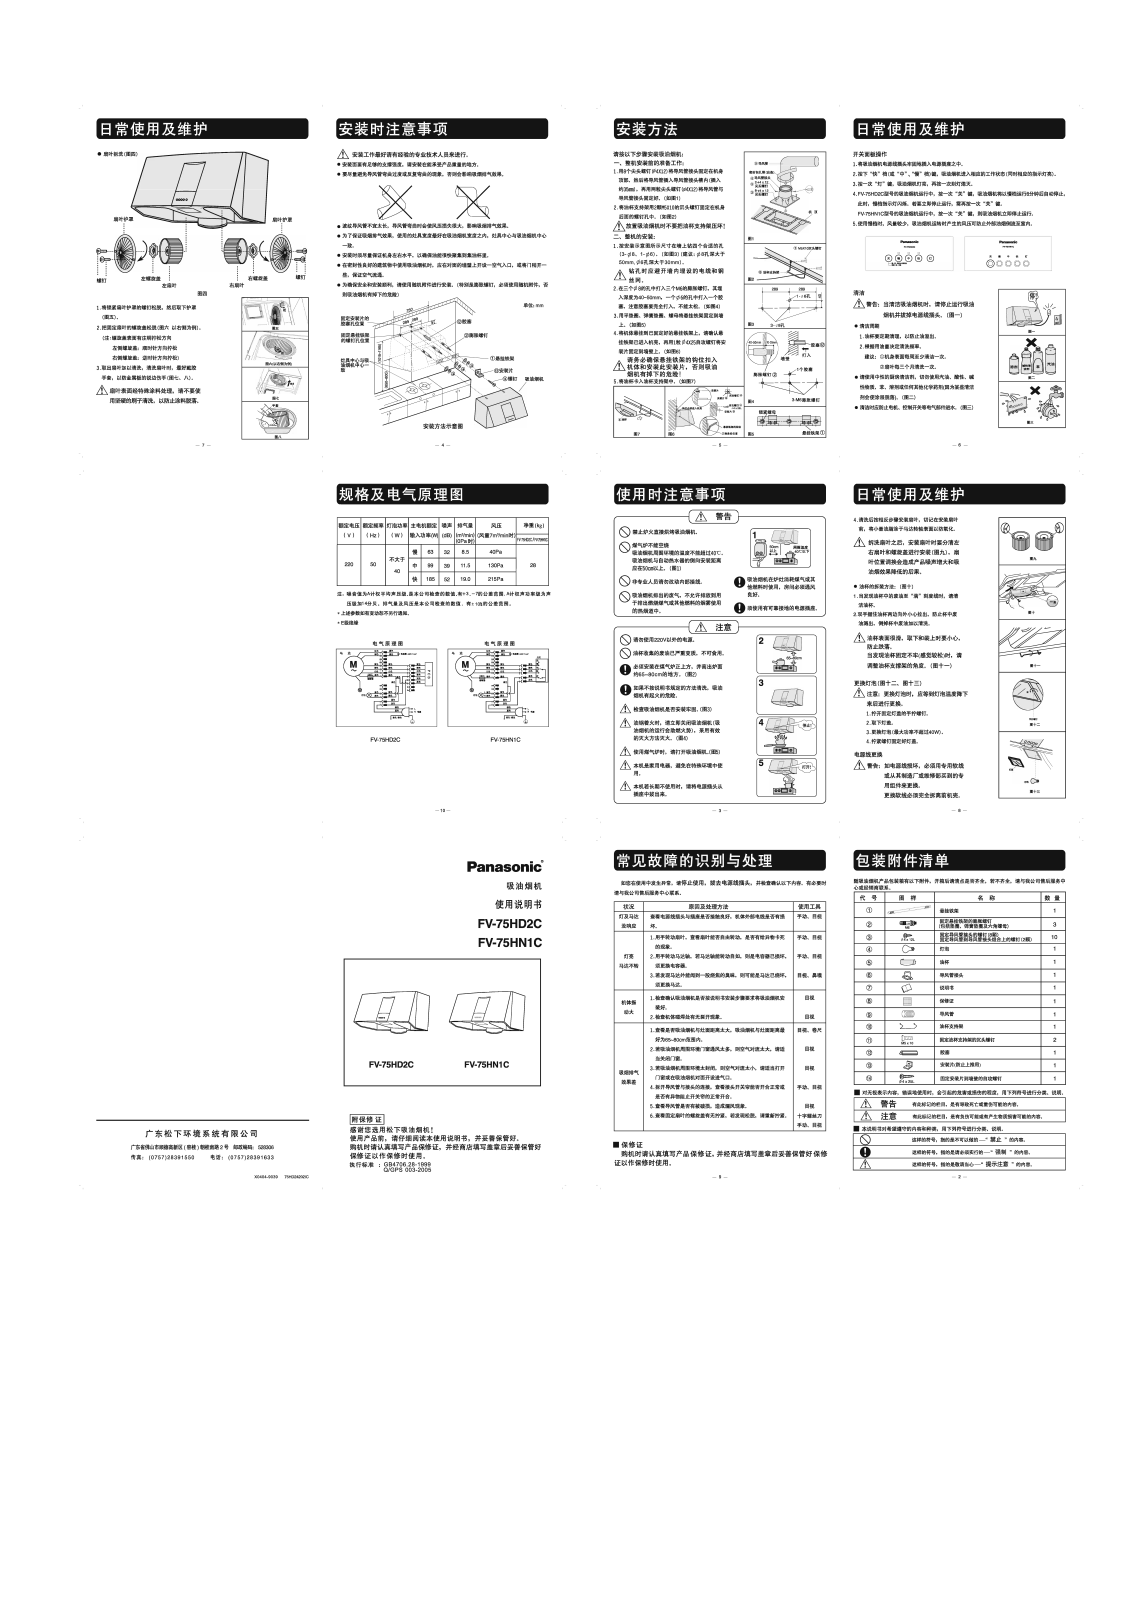 Panasonic FV-75HD2C, FV-75HN1C User Manual